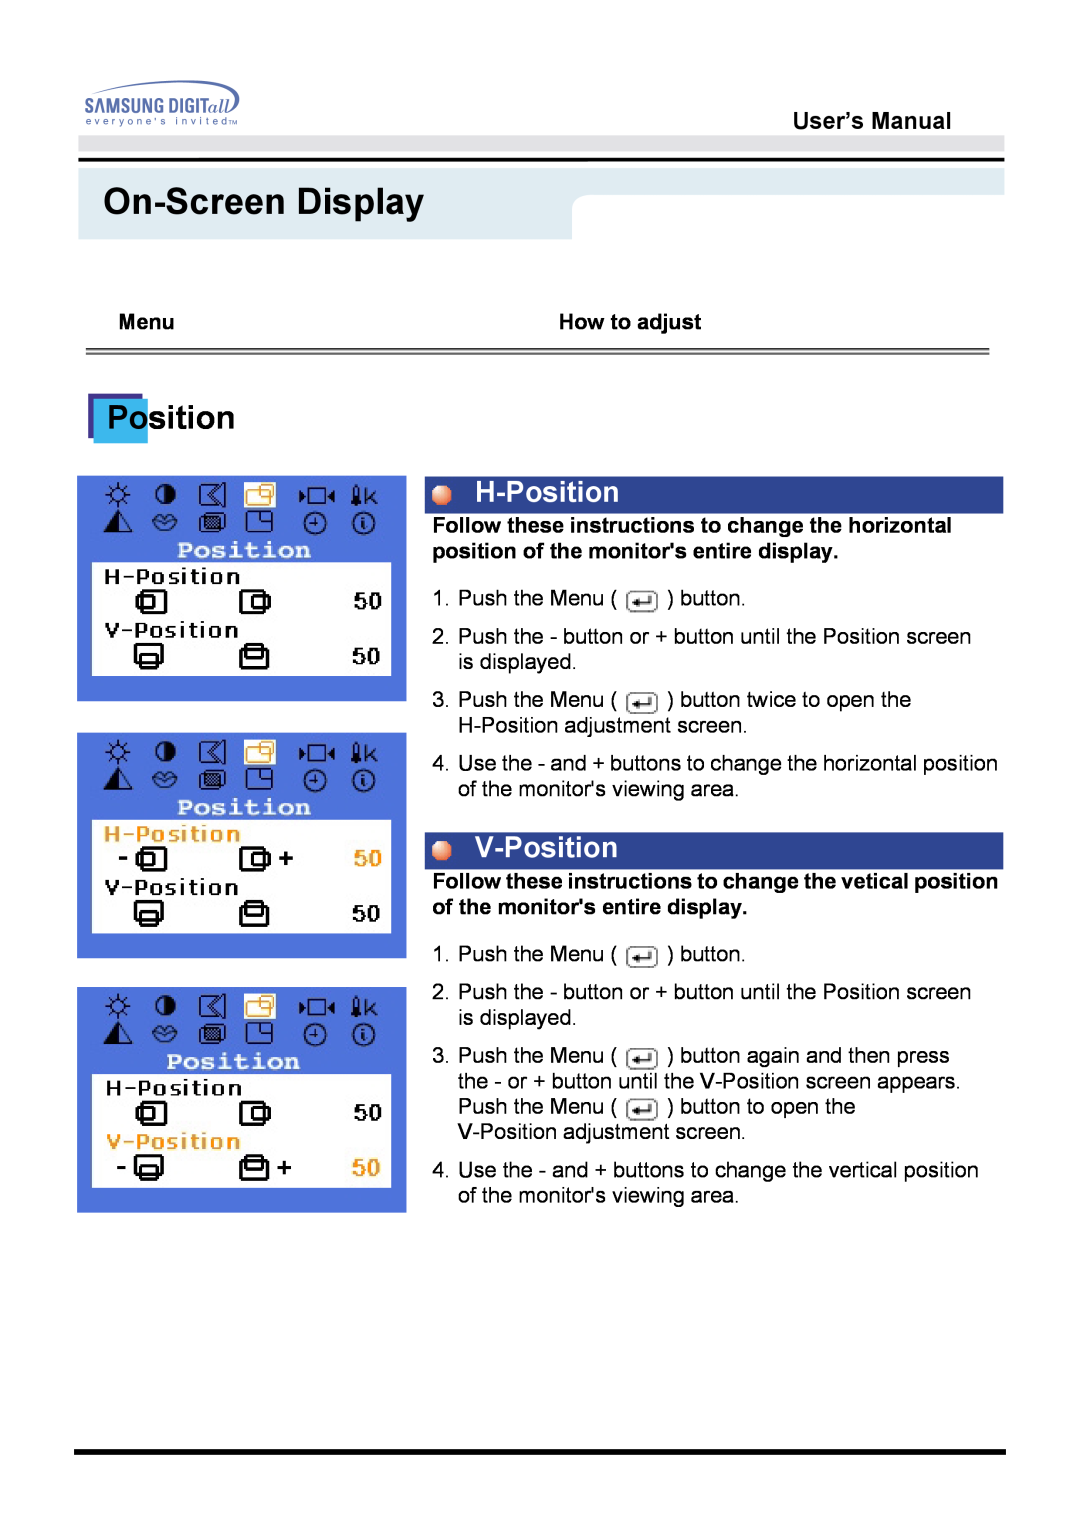 Samsung 760TFT manual On-Screen Display, H-Position, V-Position, User’s Manual, Menu, How to adjust 